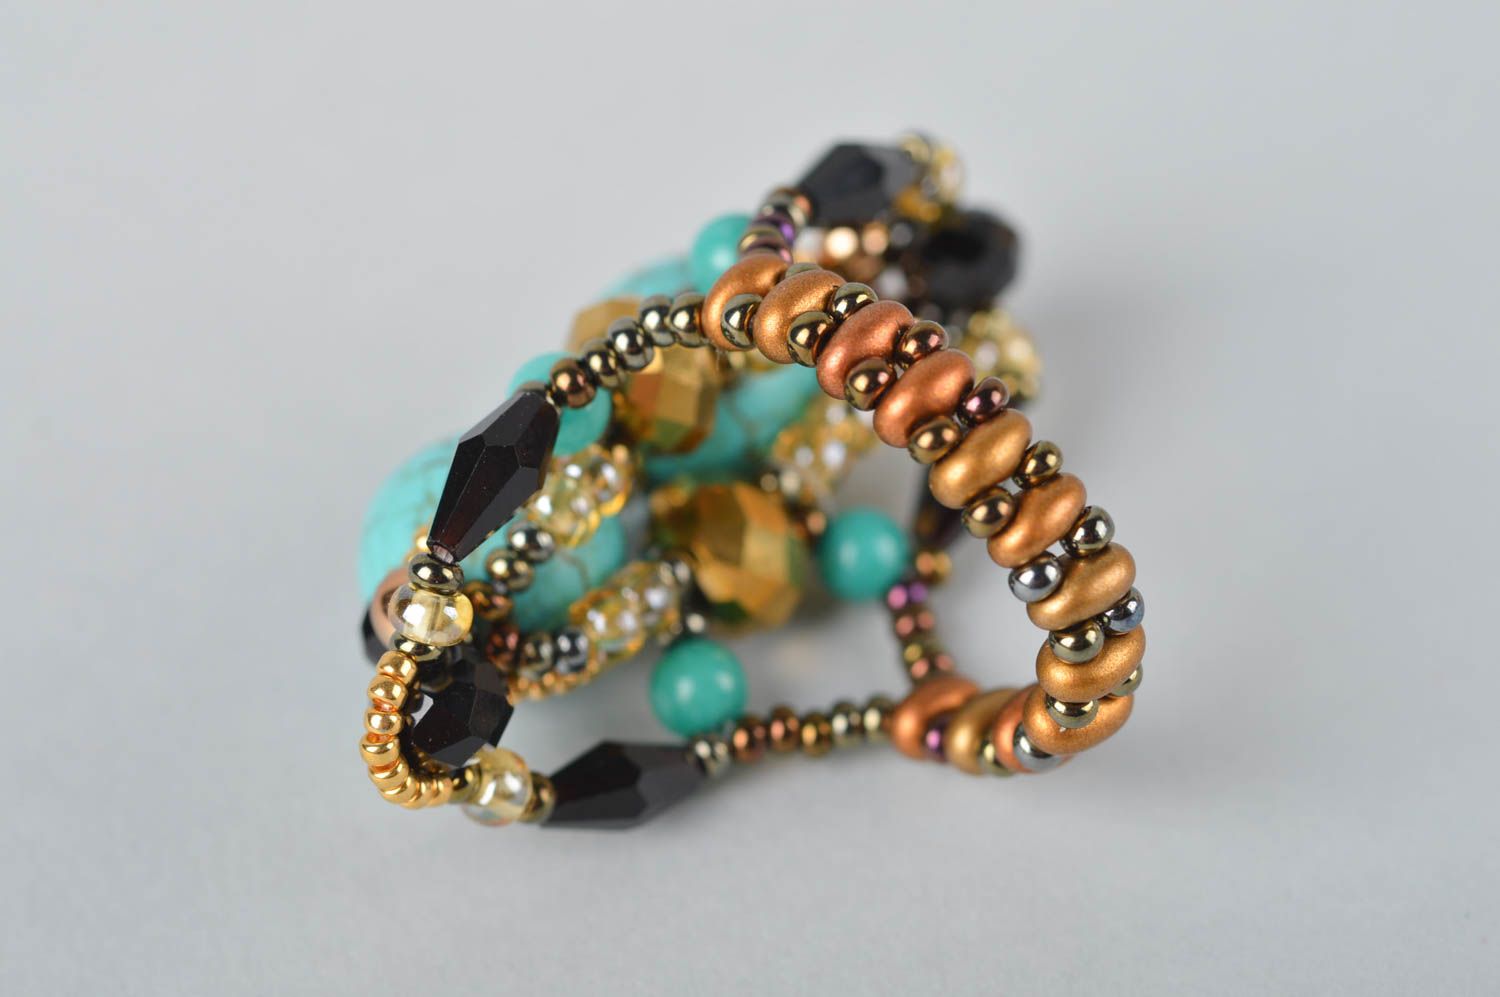 Unusual handmade beaded ring design bead ring artisan jewelry designs gift ideas photo 2